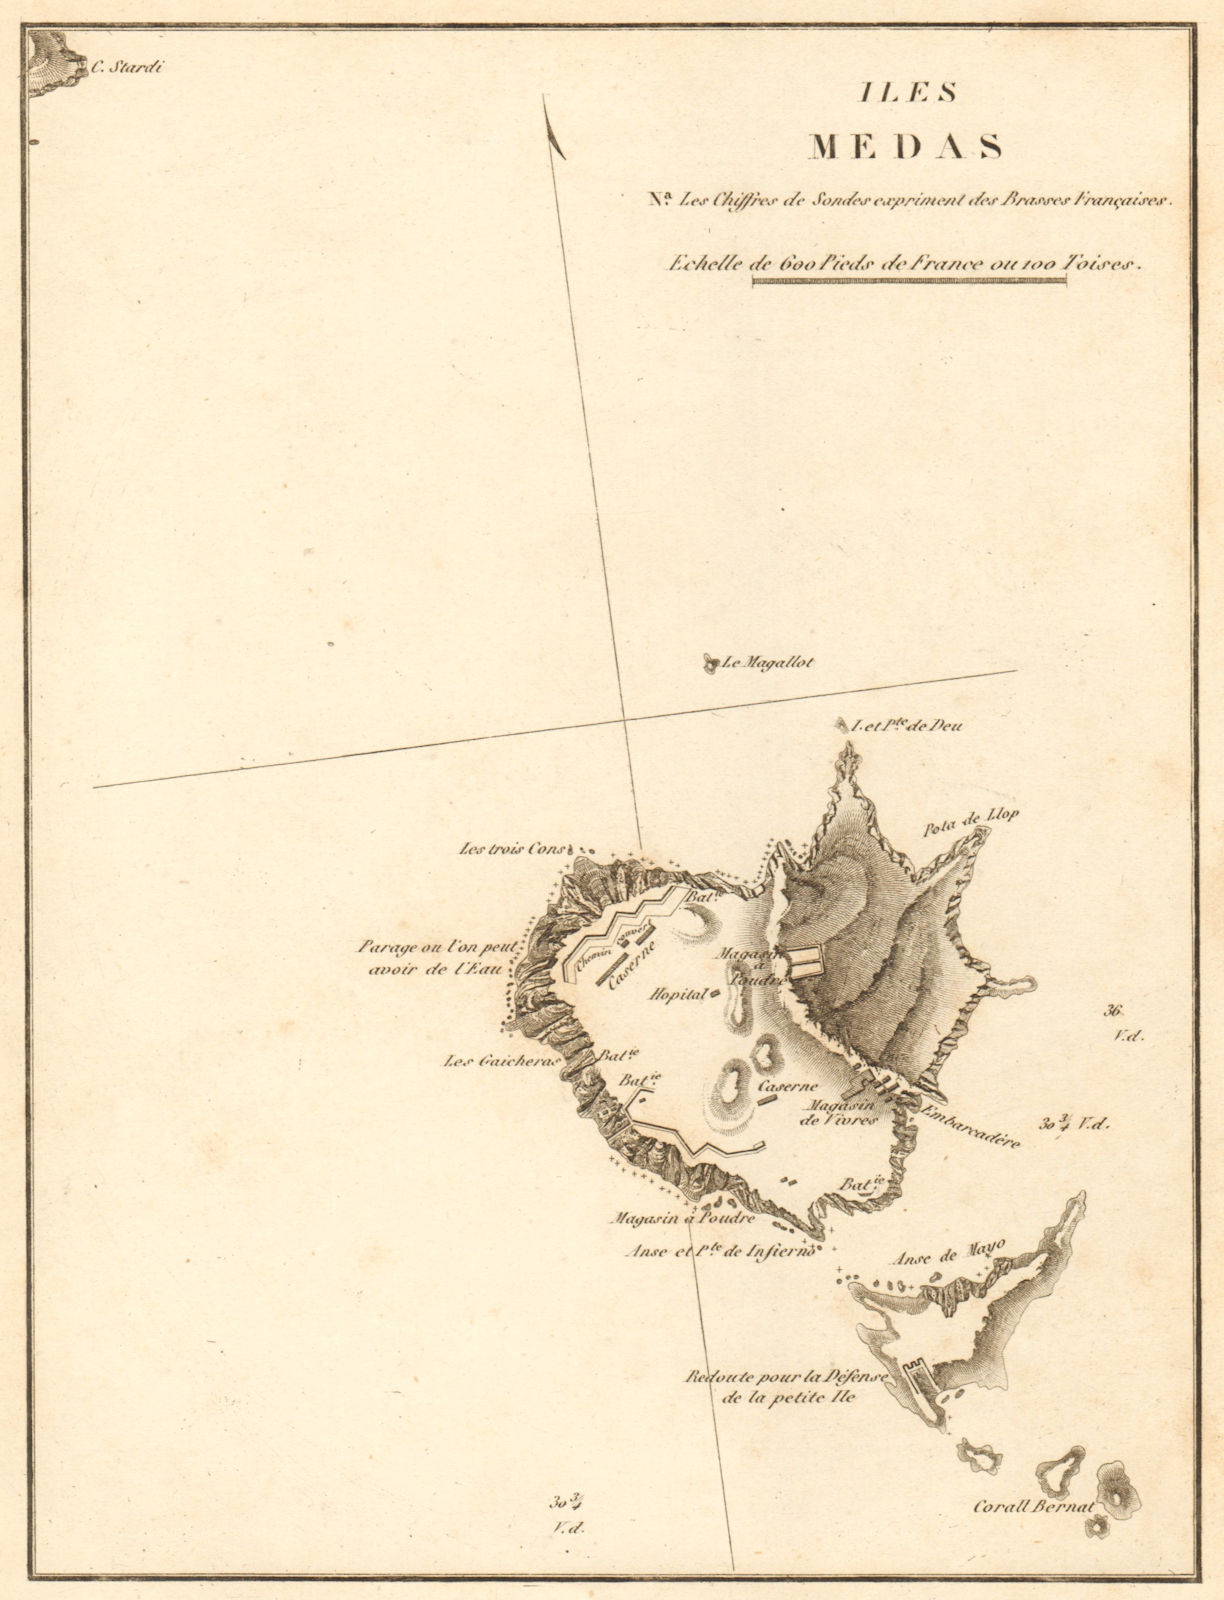 Illes Medes islands. 'Iles Medas'. Spain. Girona. GAUTTIER 1851 old map